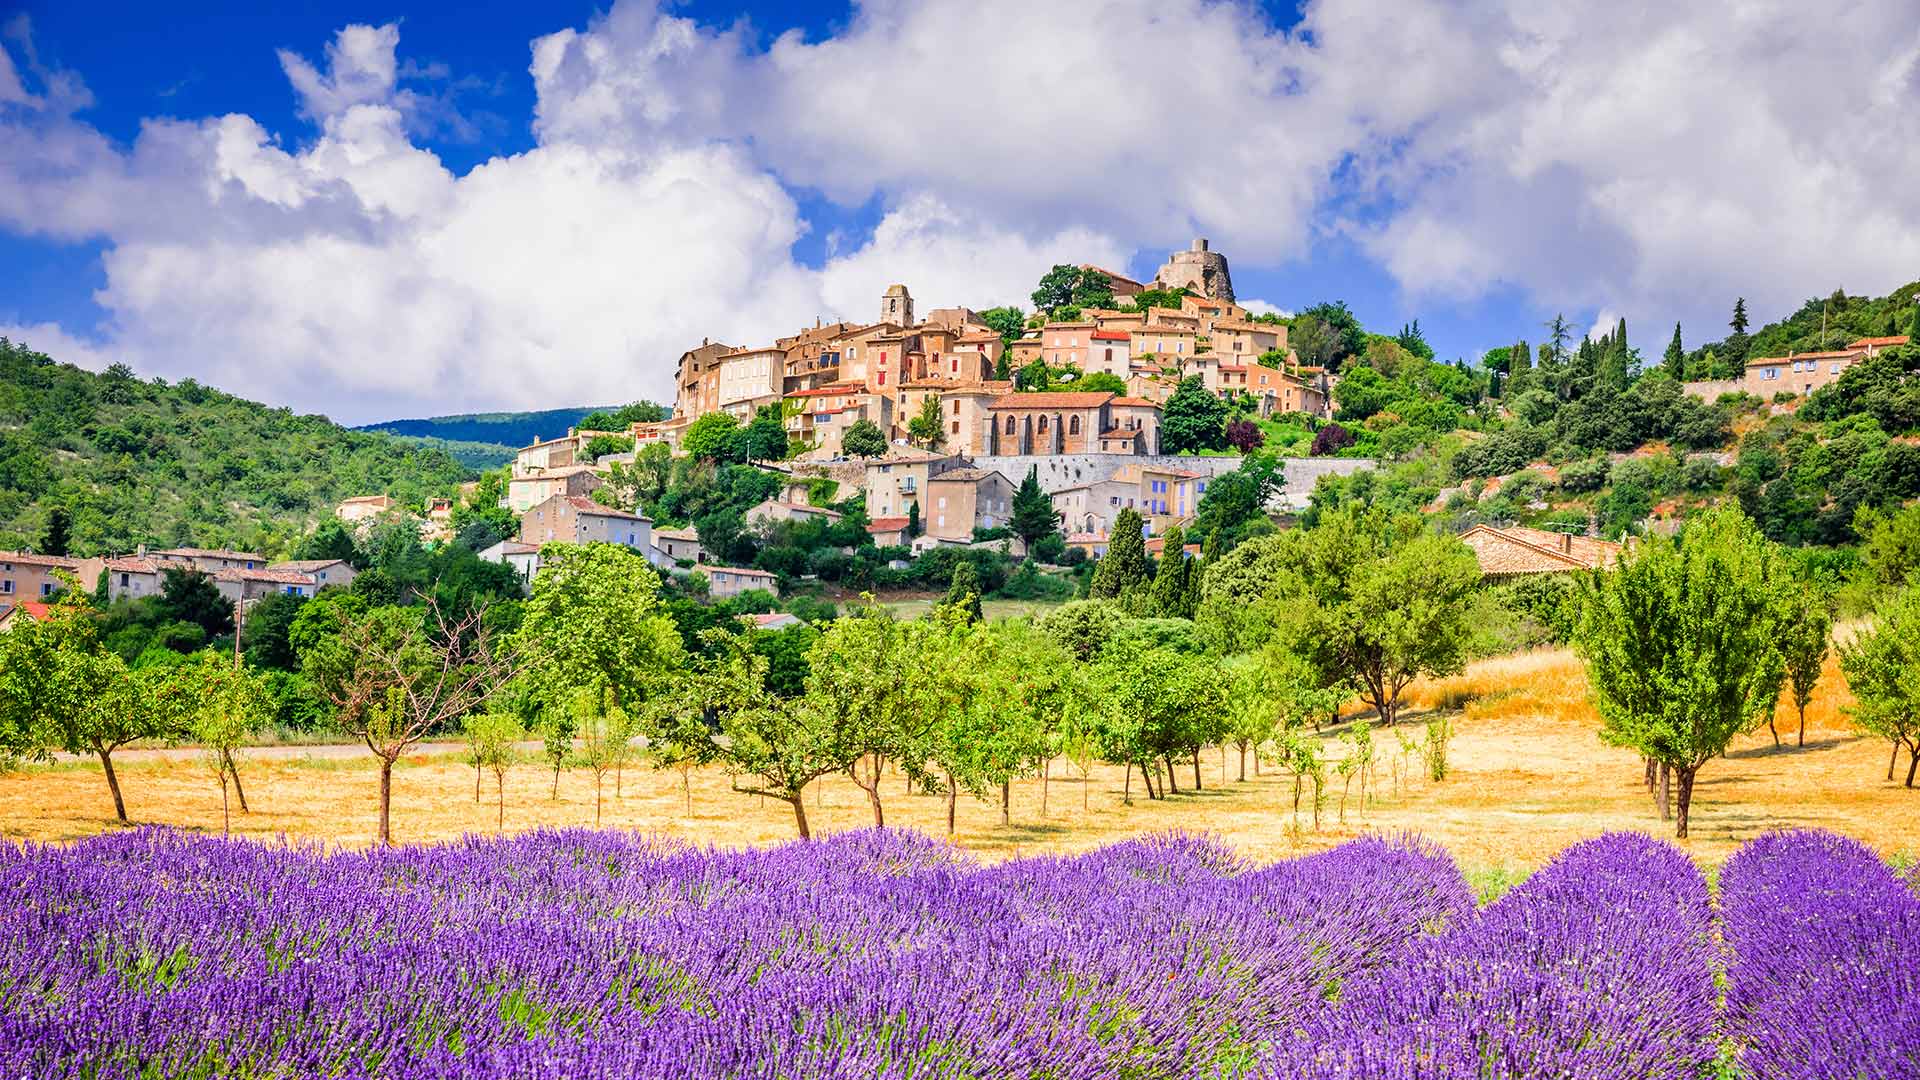 Wallpaper Mural Village of Menton in Provence, France | Muralunique